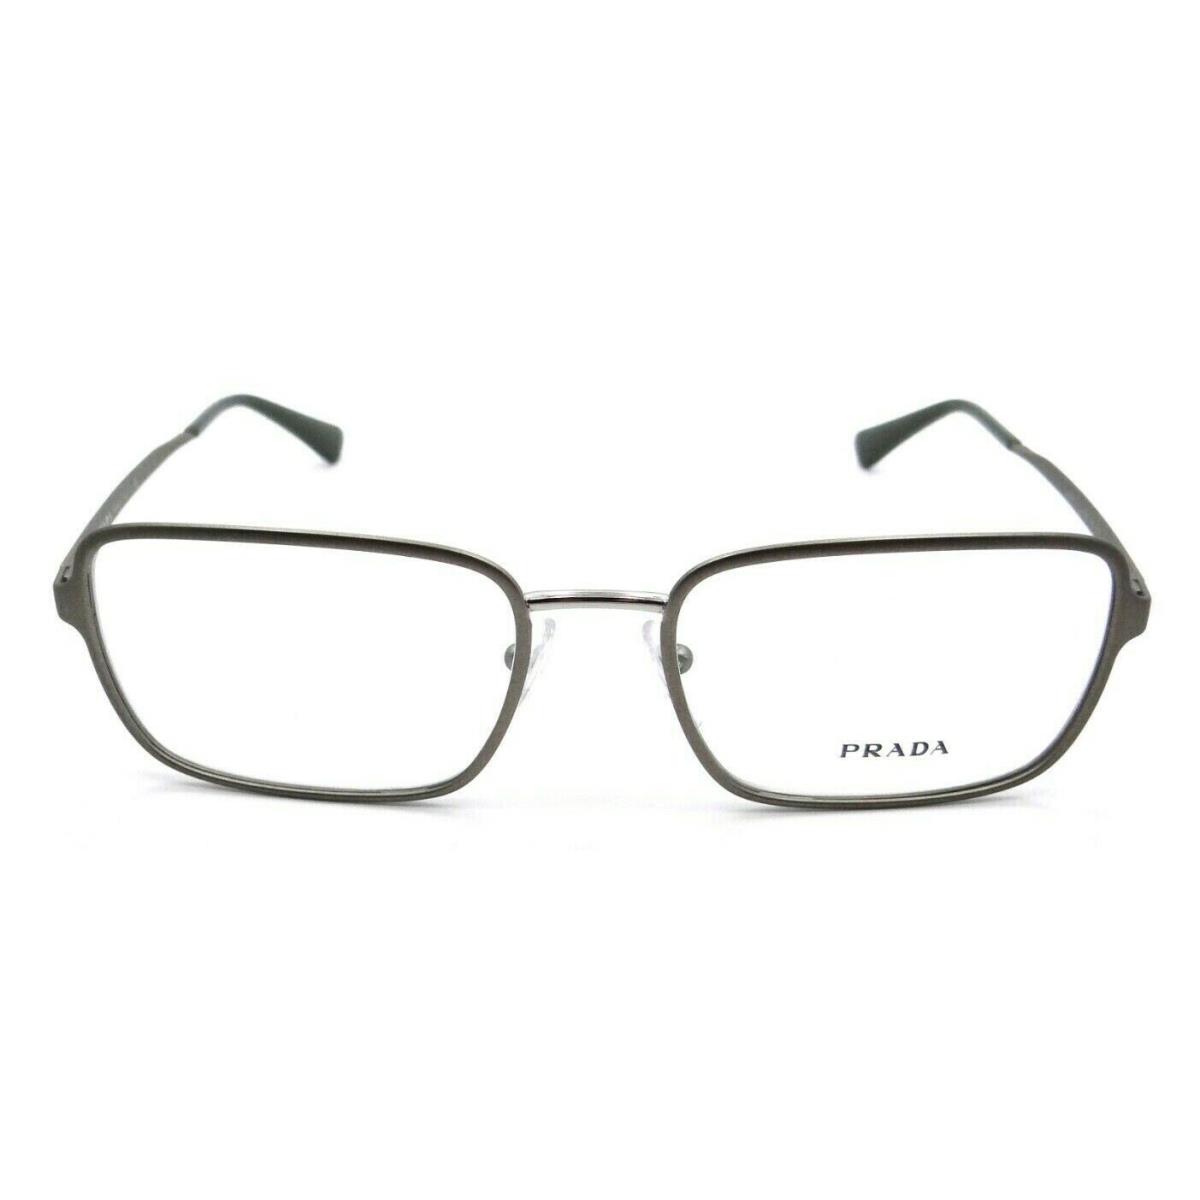 Prada Eyeglasses Frames PR 57XV VIX-1O1 54-18-145 Matte Silver Made in Italy